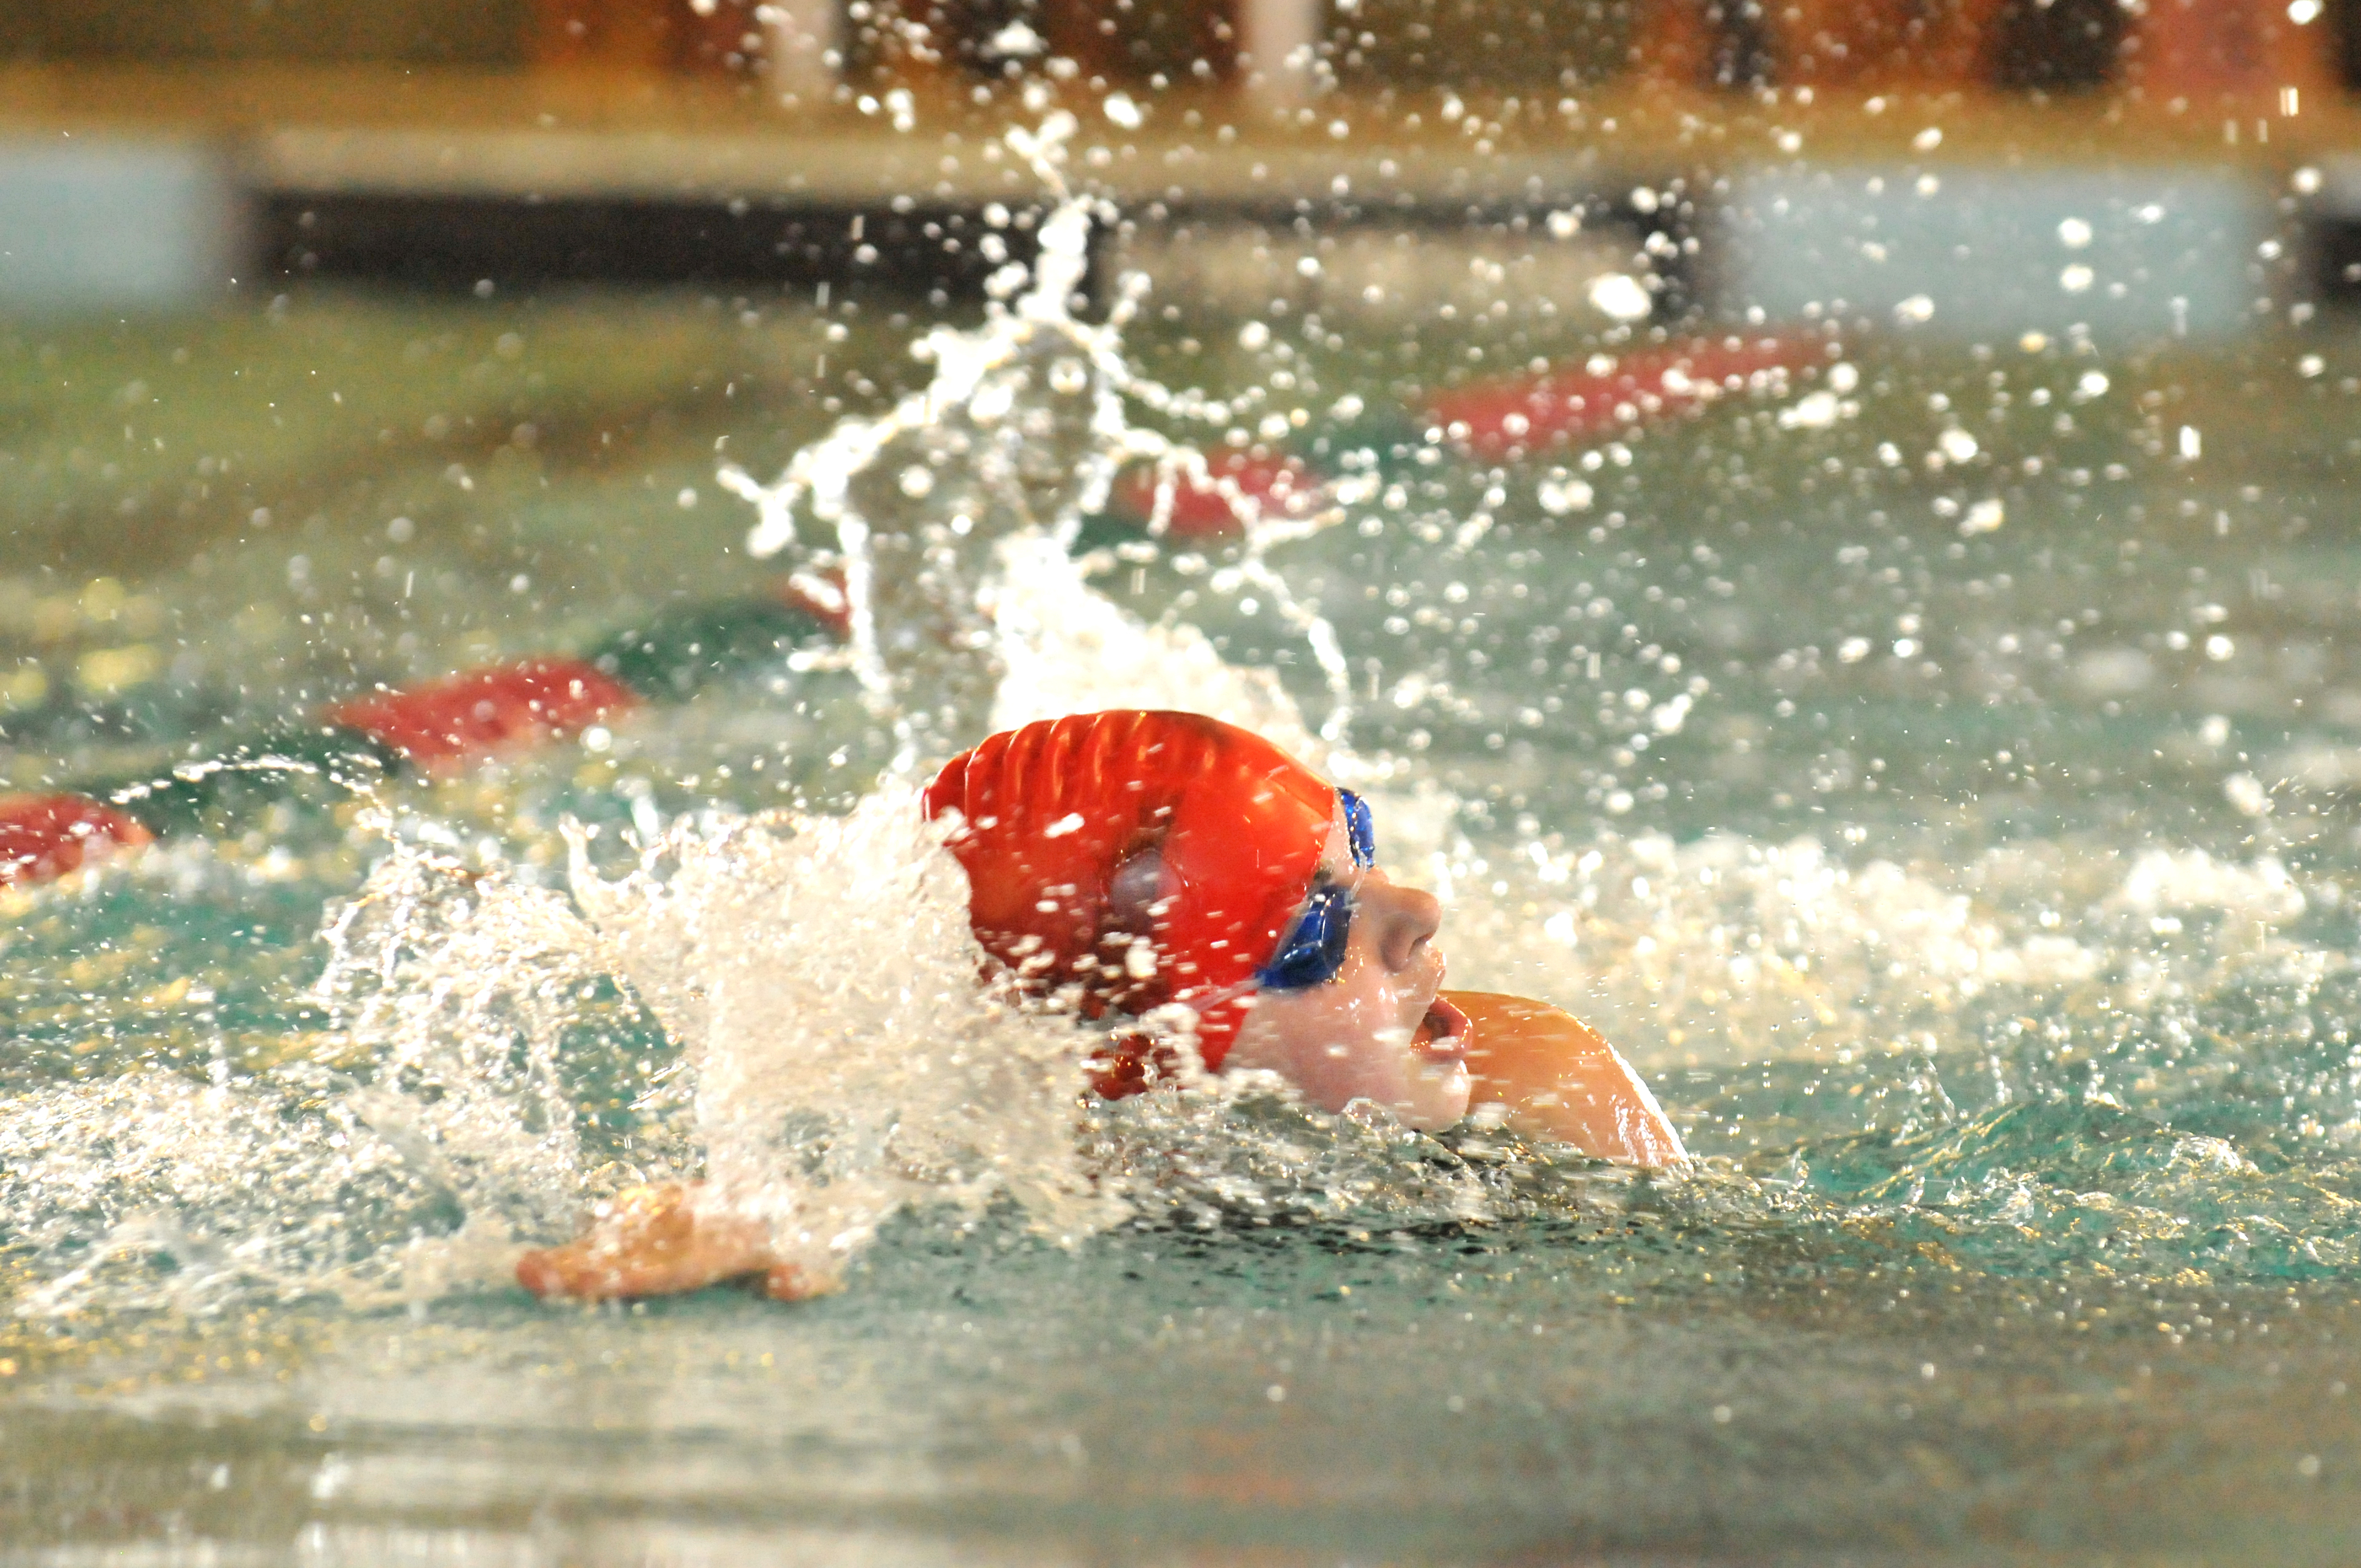 High School swim teams have strong showing at Harlingen meet